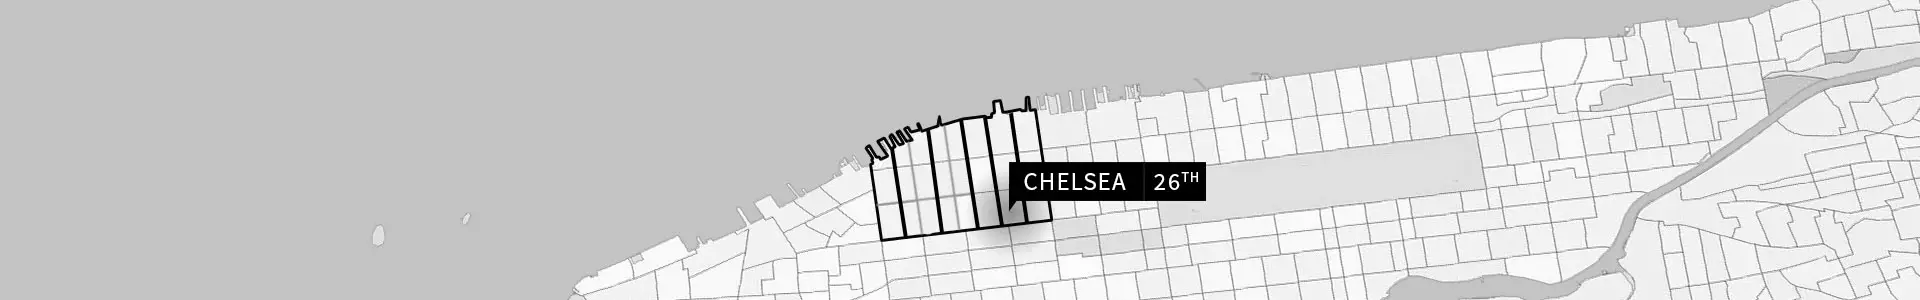 Chelsea, 26th Street map